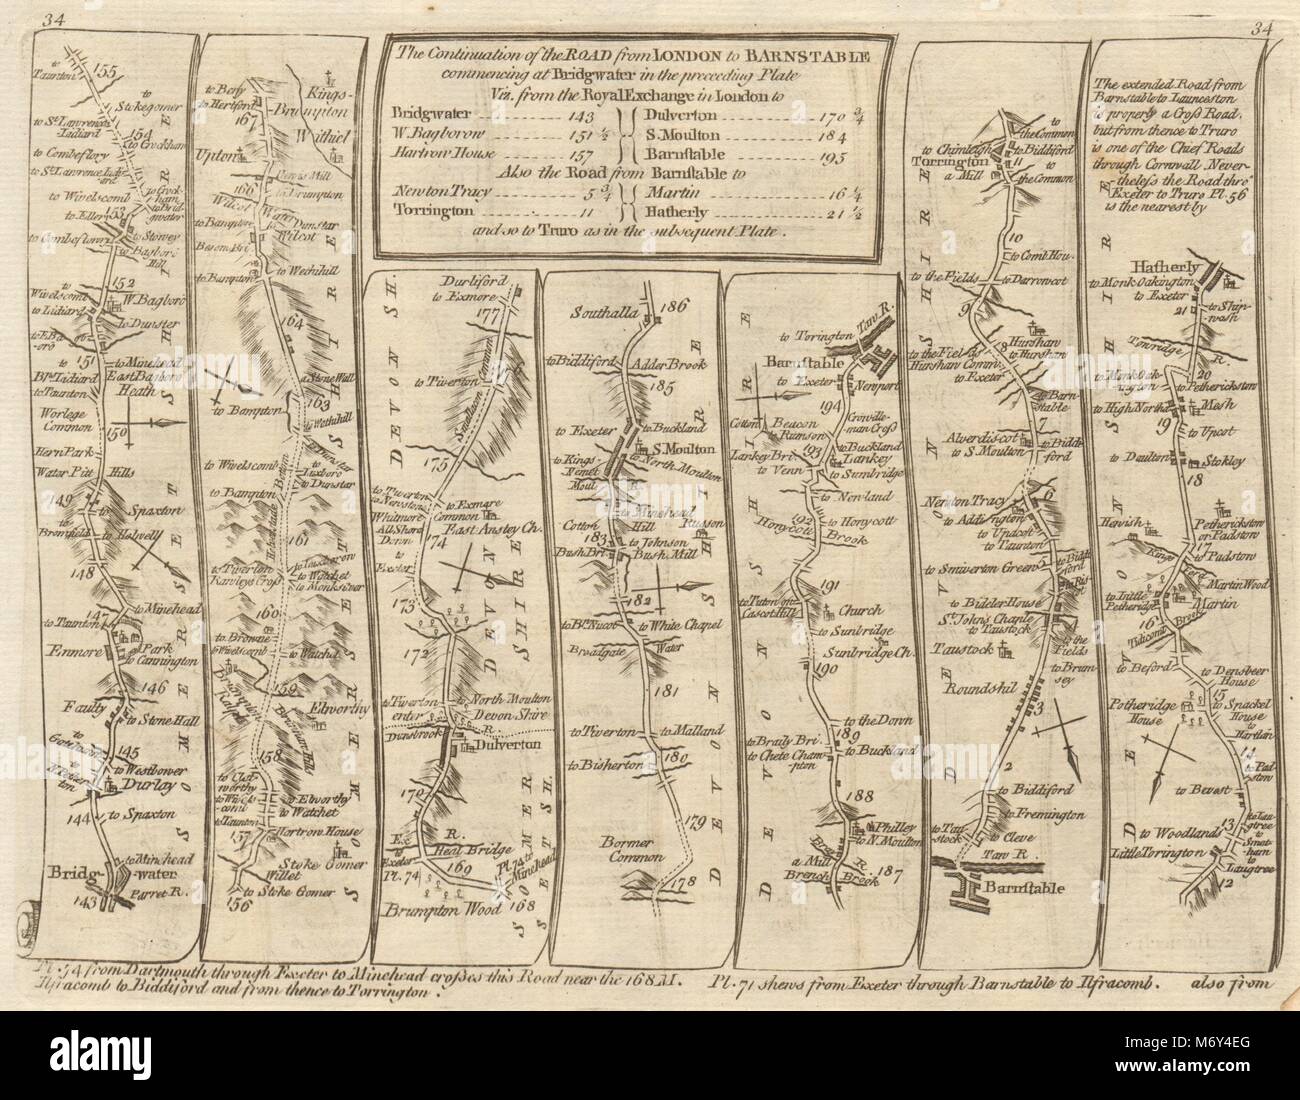 Bridgwater South Molton Barnstable Great Torrington. KITCHIN road map 1767 Stock Photo